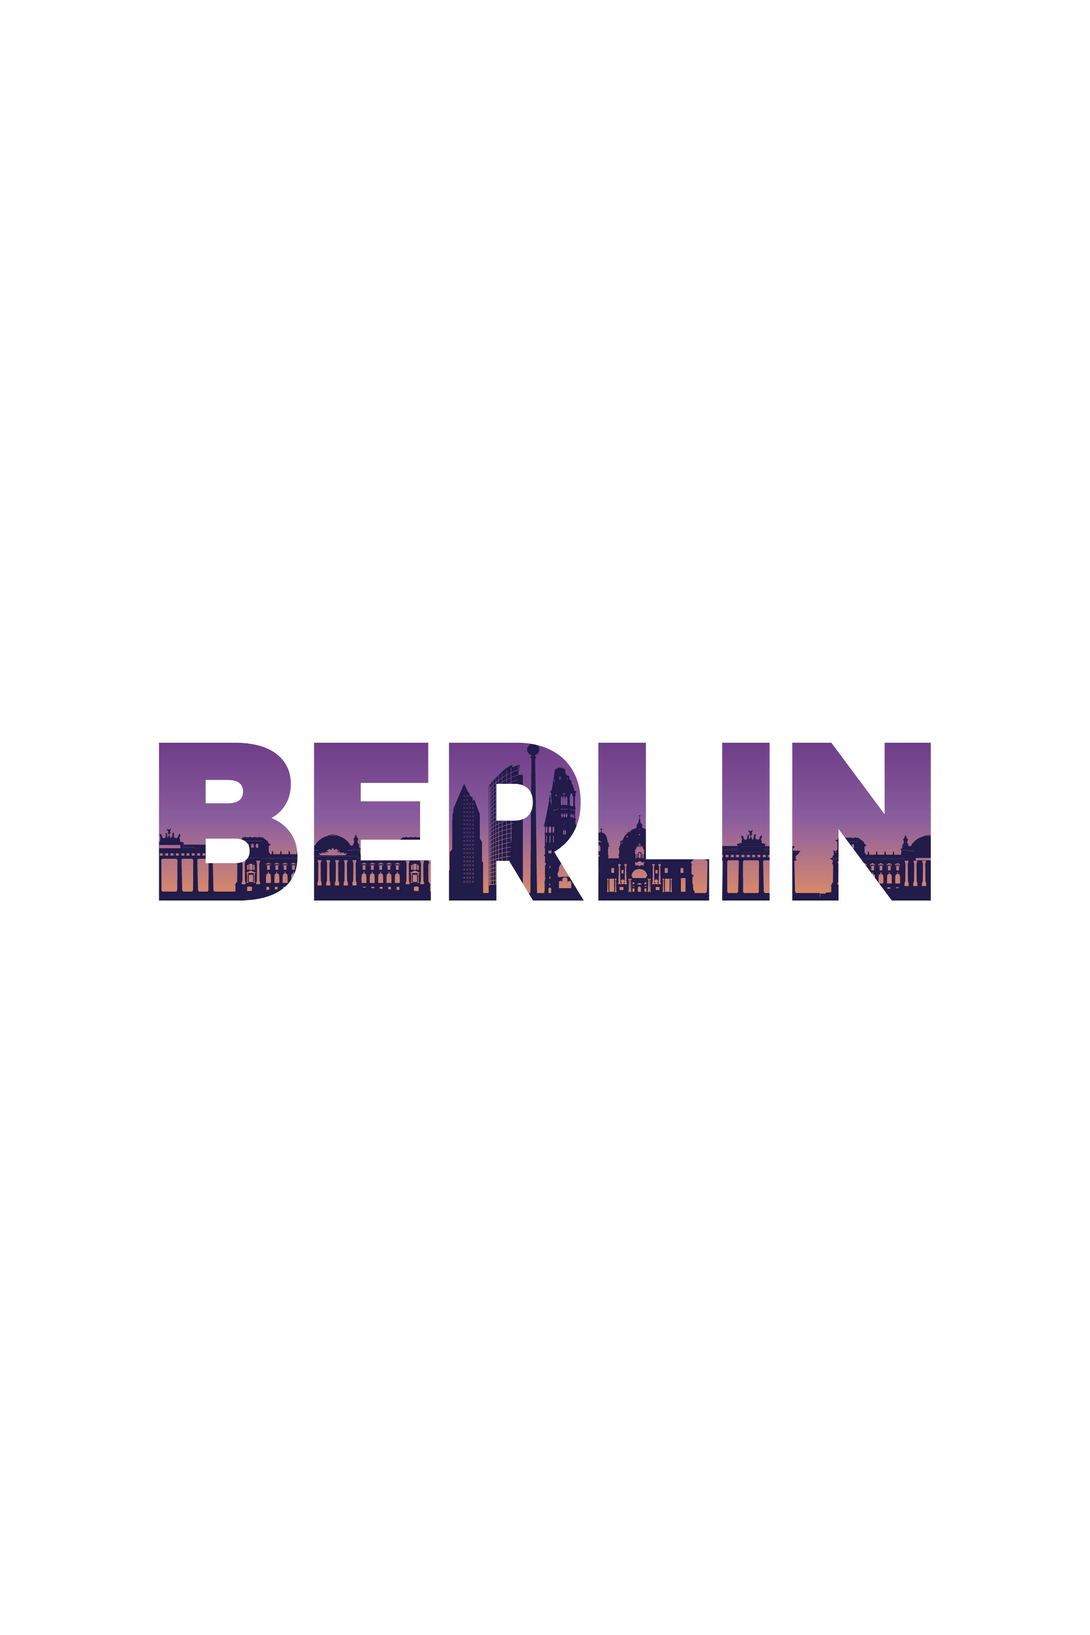 Berlin Skyline Printed T-Shirt For Men - WowWaves - 1